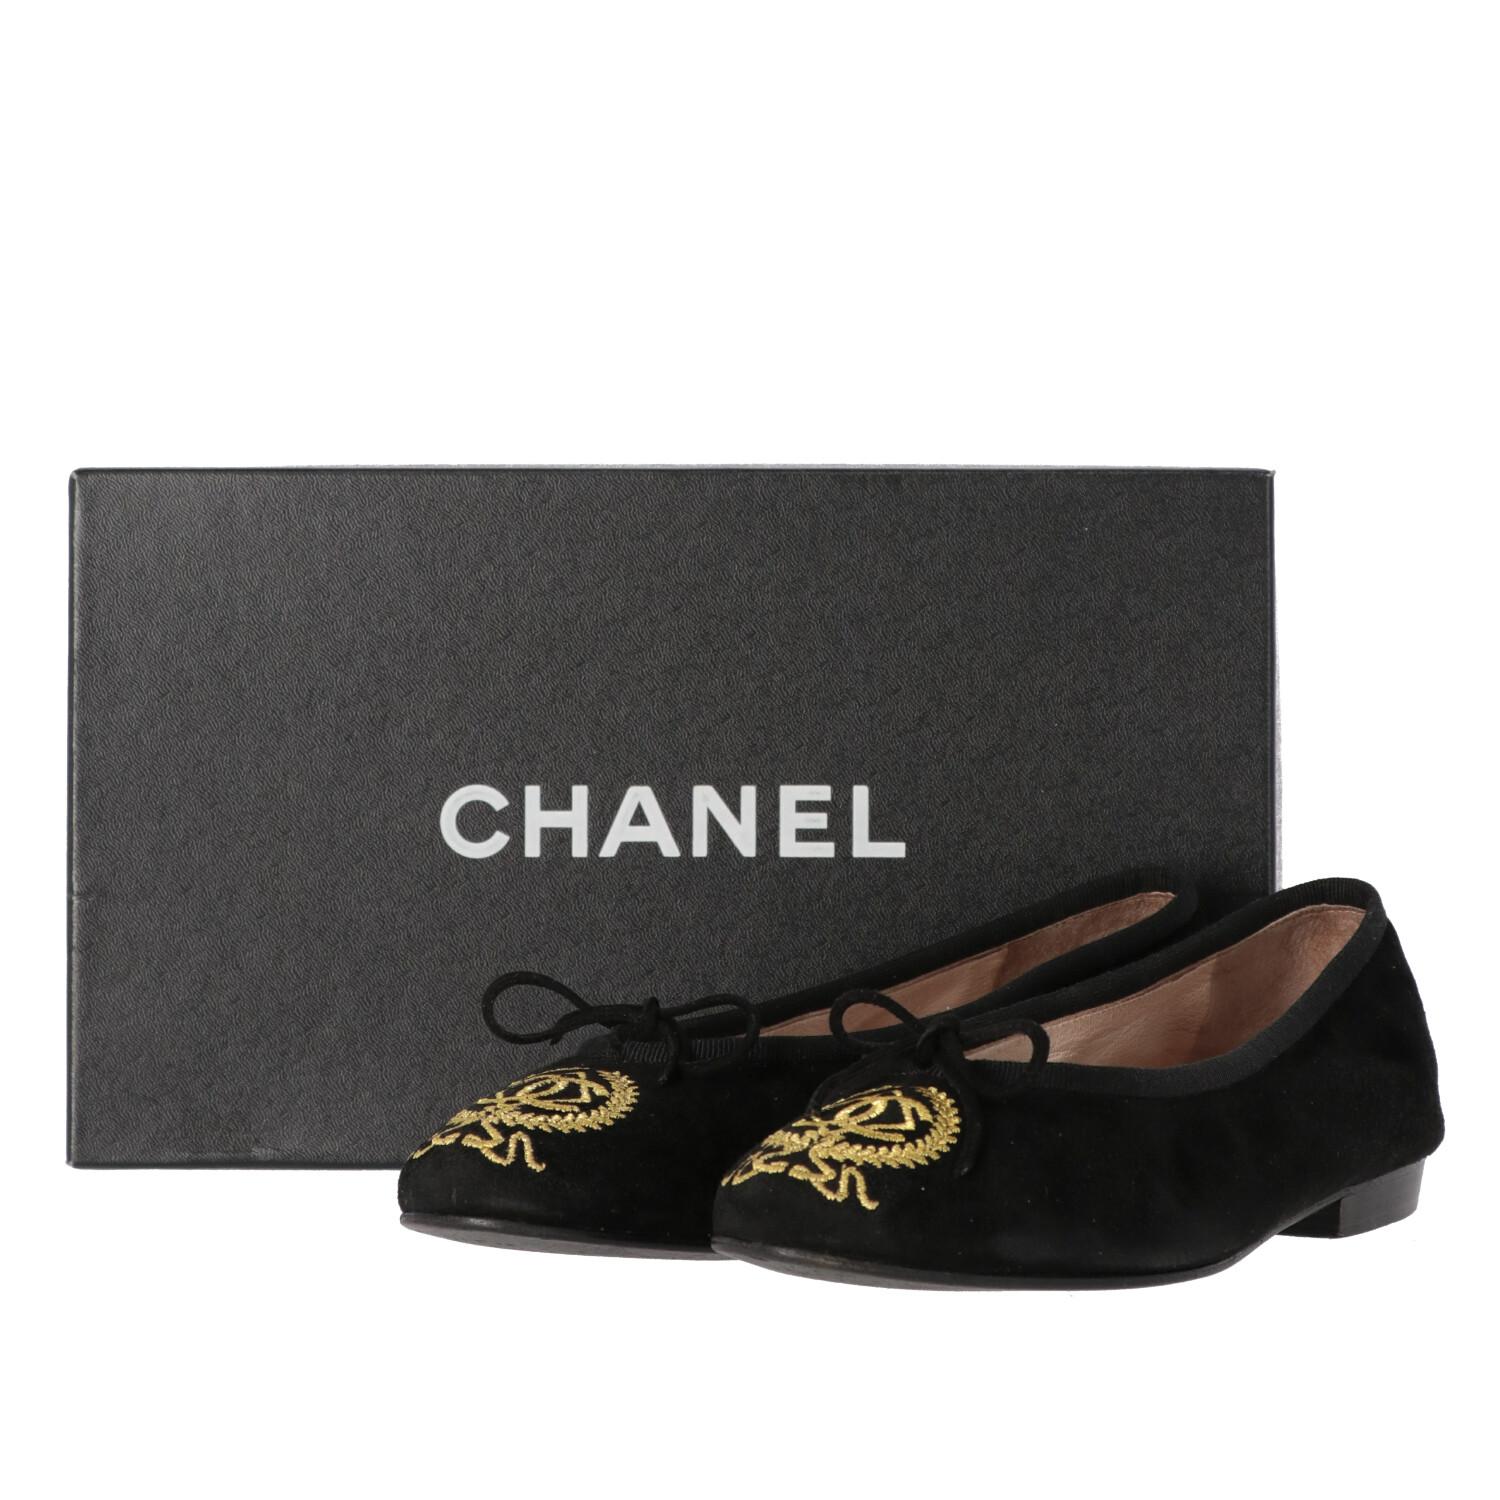 2010s Chanel Vintage Black Suede Ballerinas with Golden Logo 2